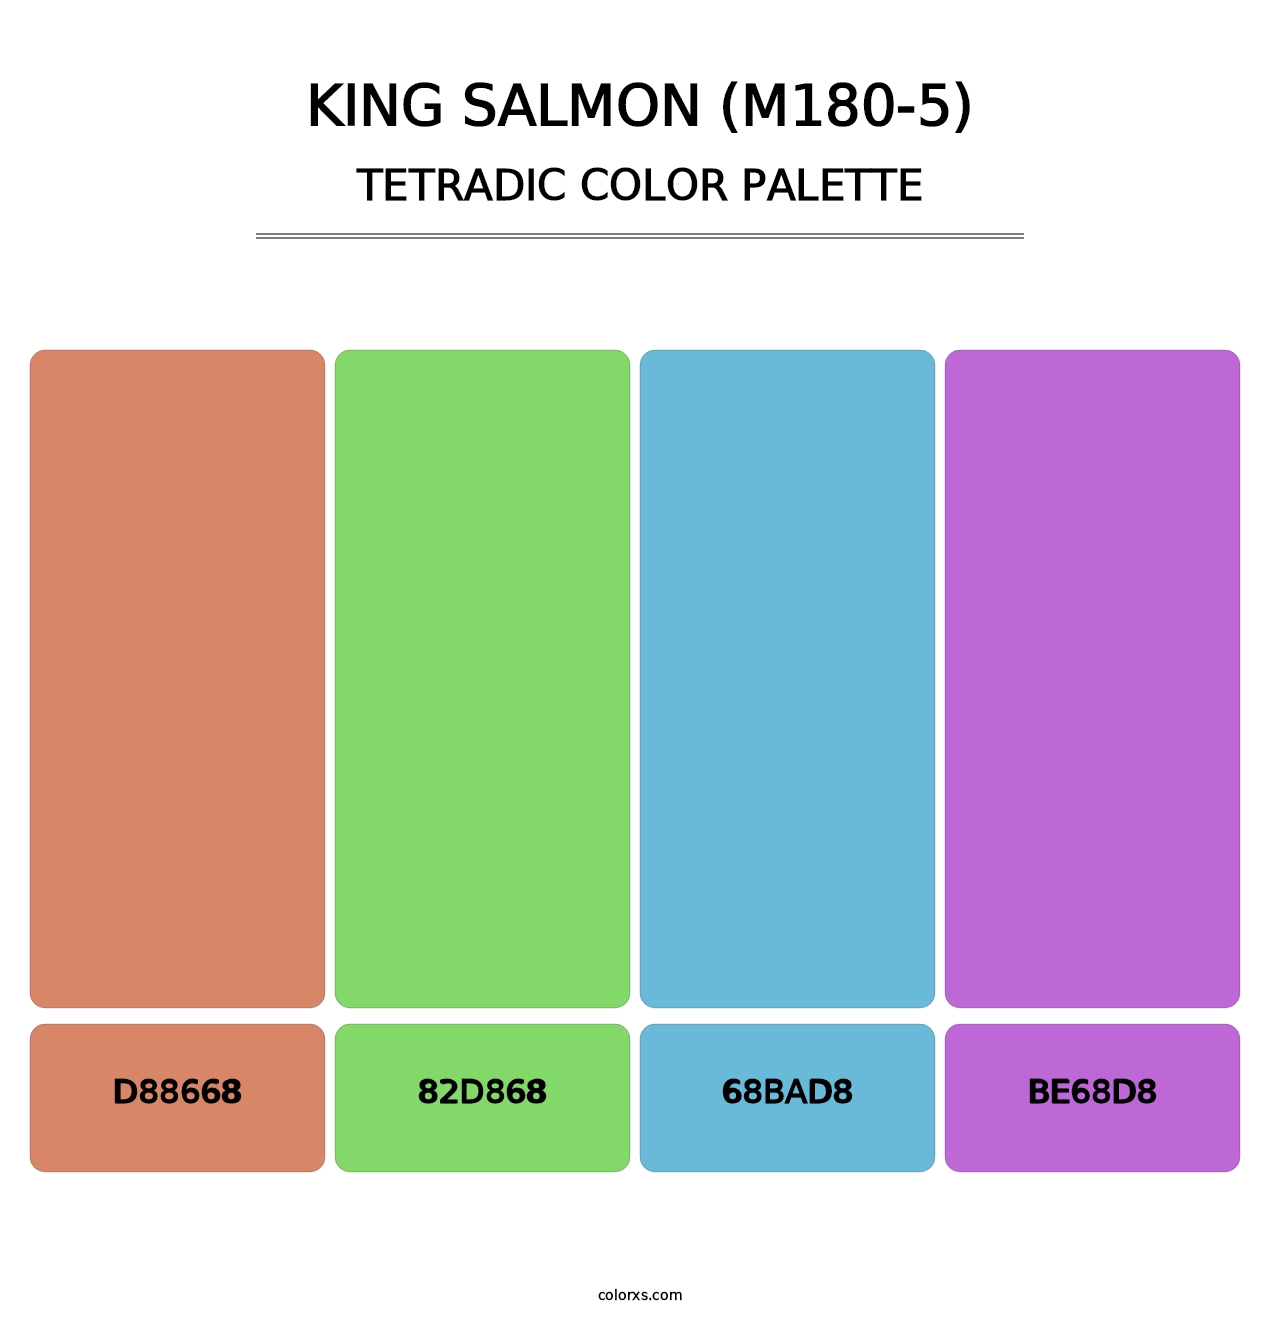 King Salmon (M180-5) - Tetradic Color Palette